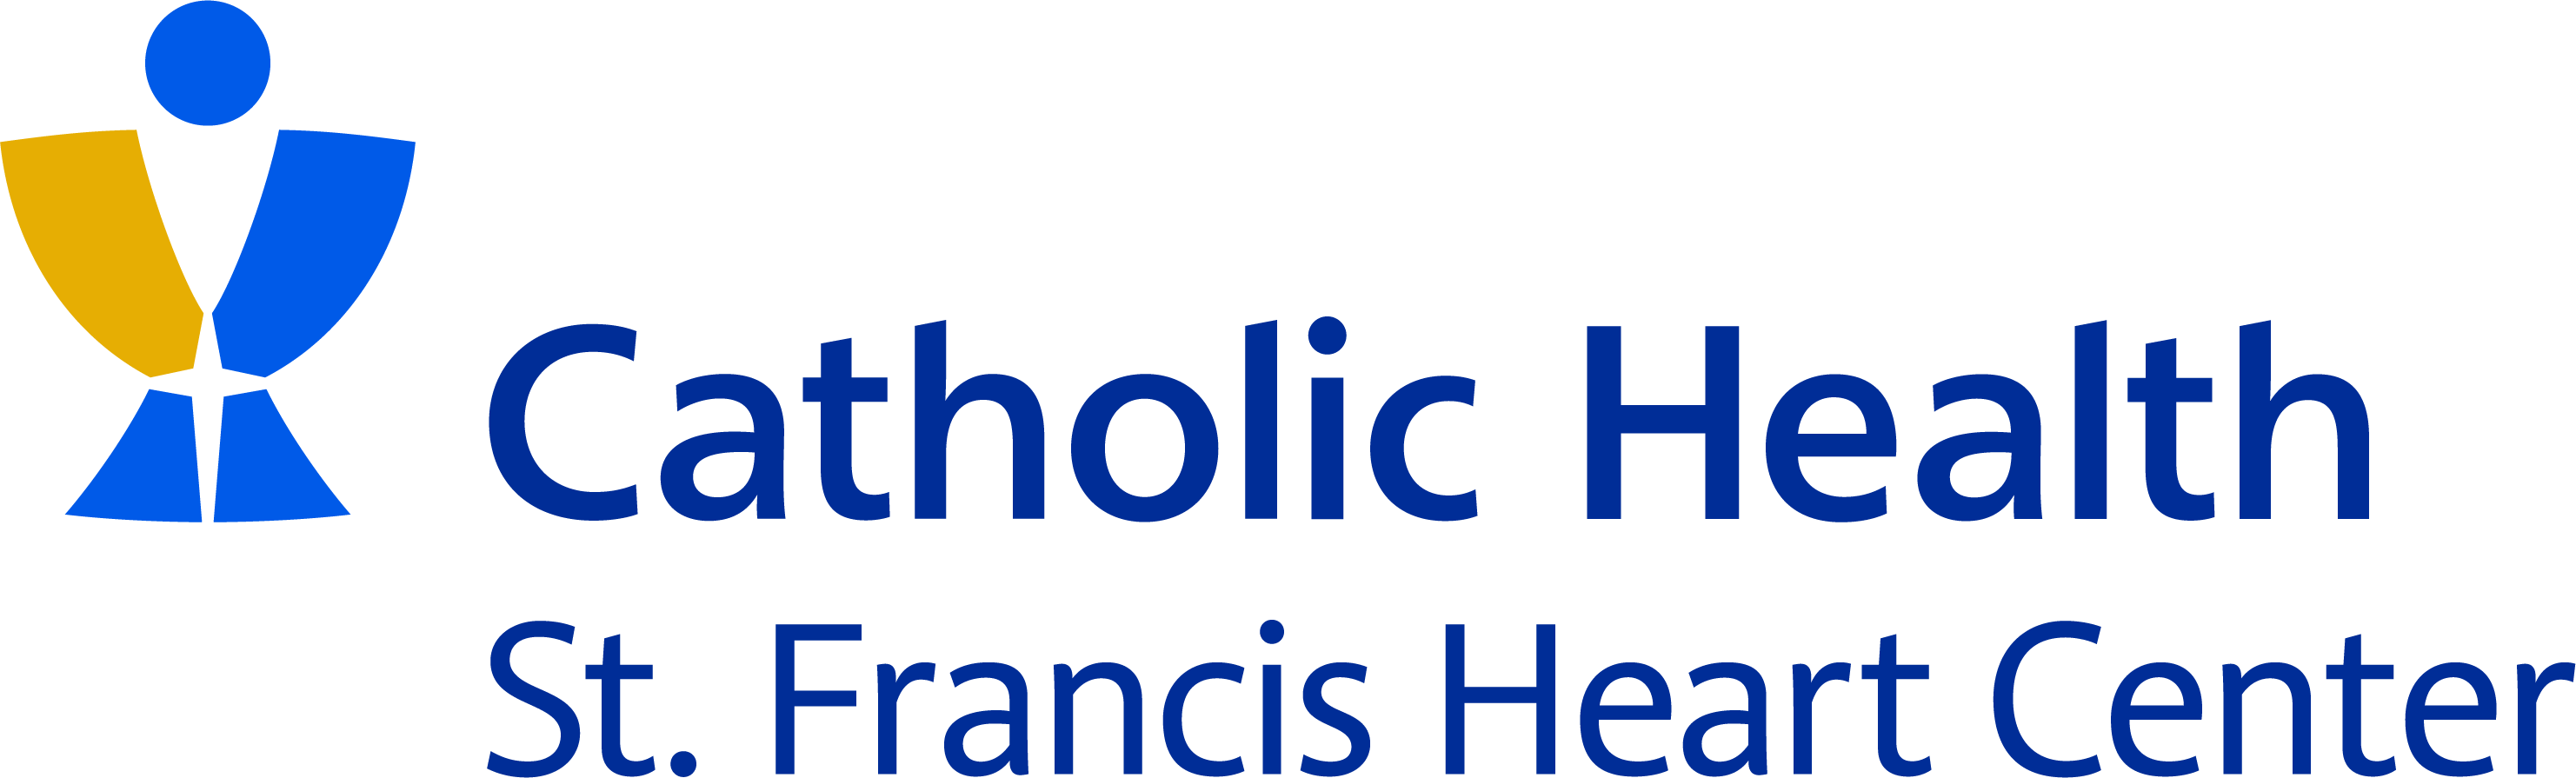 Catholic Health, navigate to home